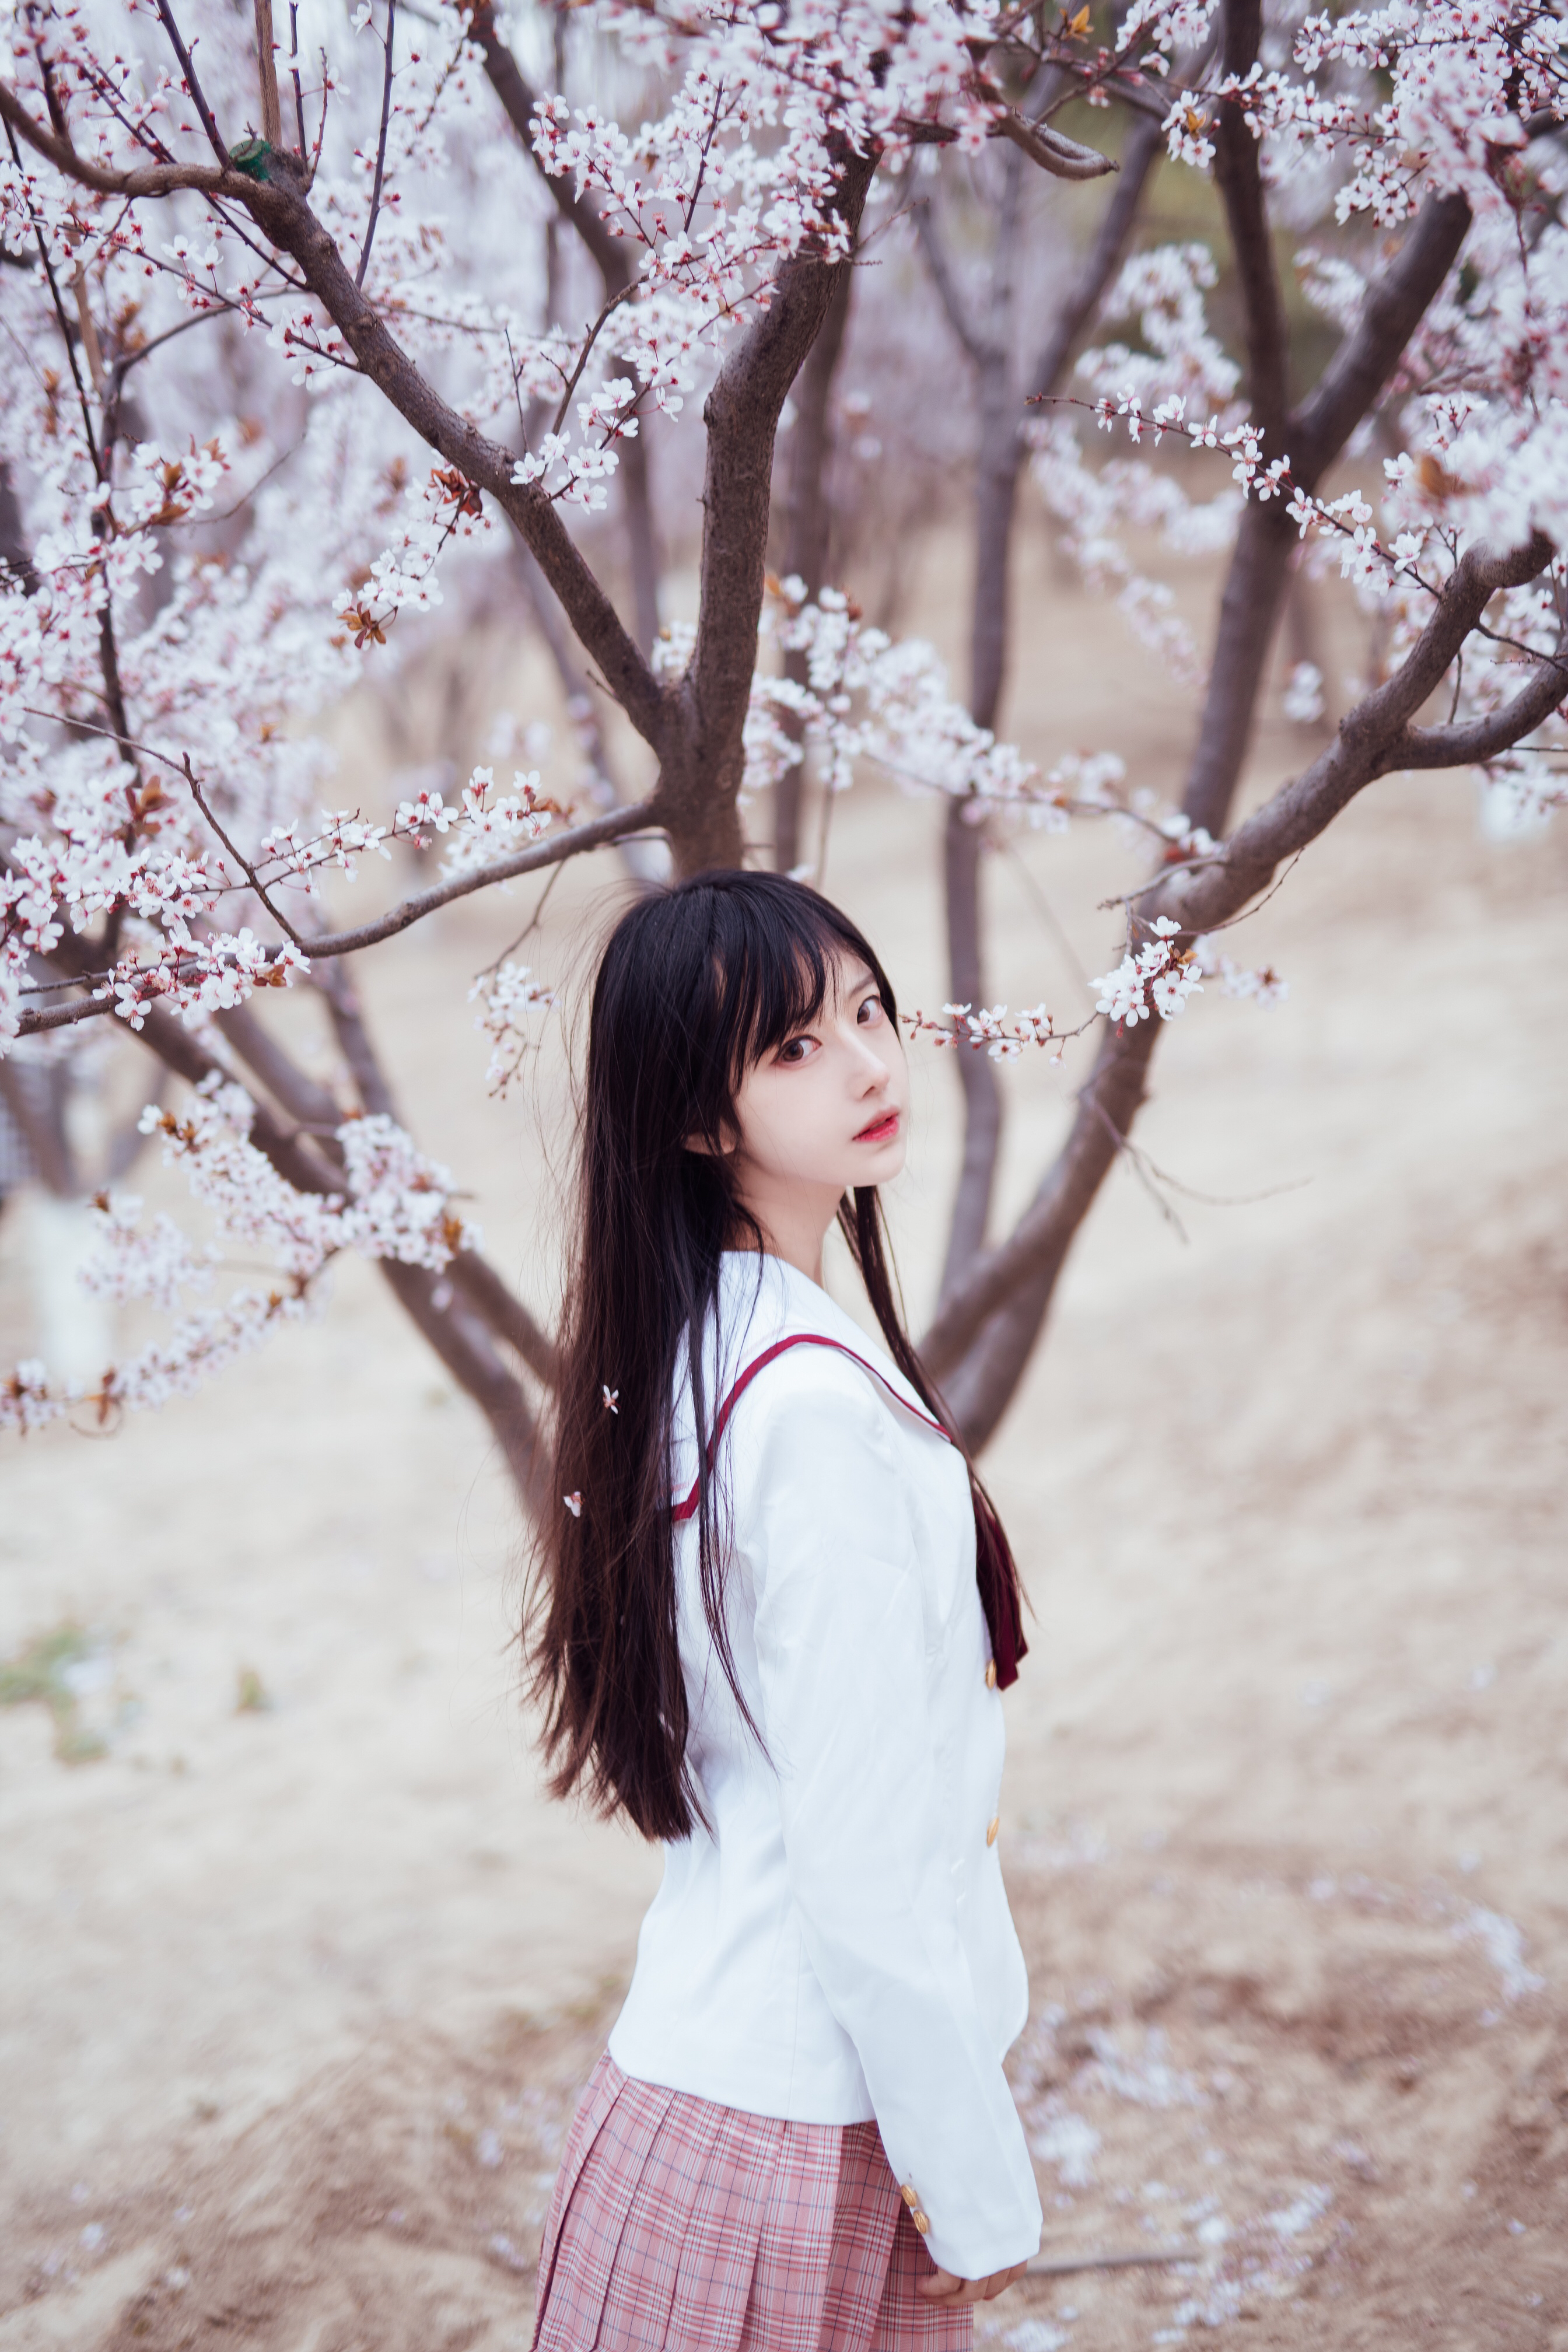 People 2688x4032 cherry blossom Asian women model dark hair women outdoors standing trees plants looking at viewer long hair Shika XiaoLu